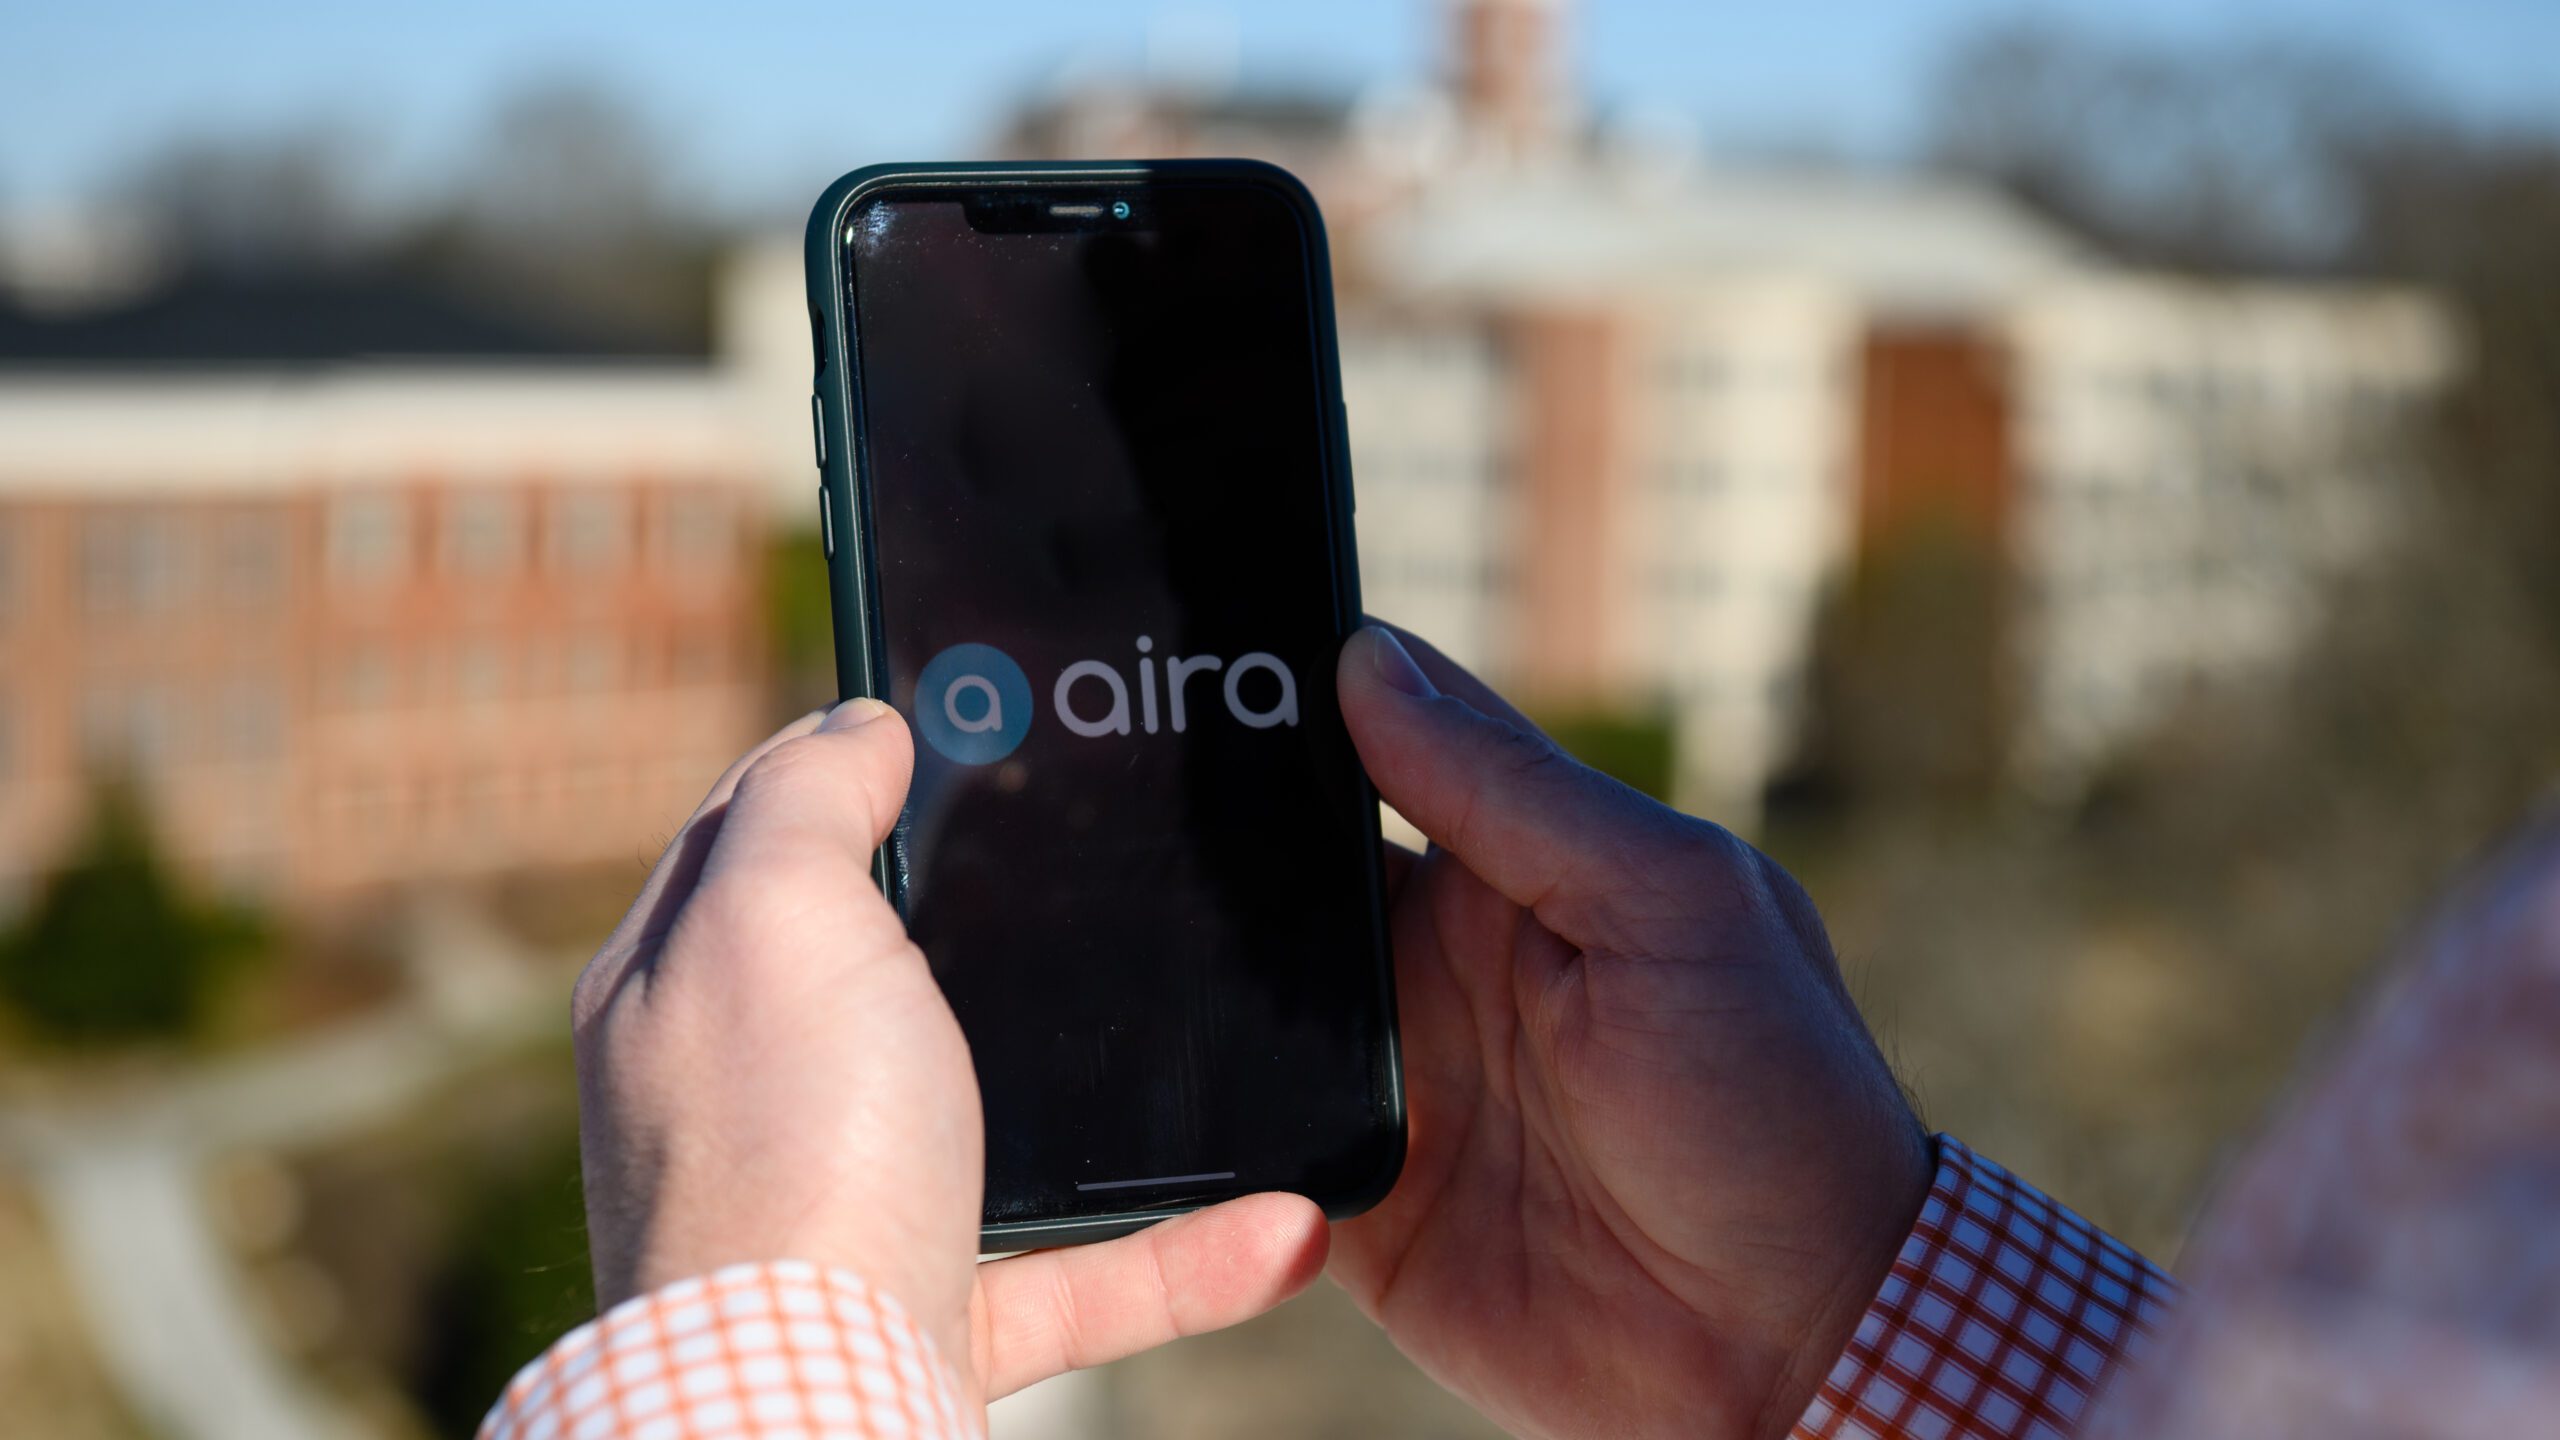 A man's hands holding an iPhone with an Aira logo